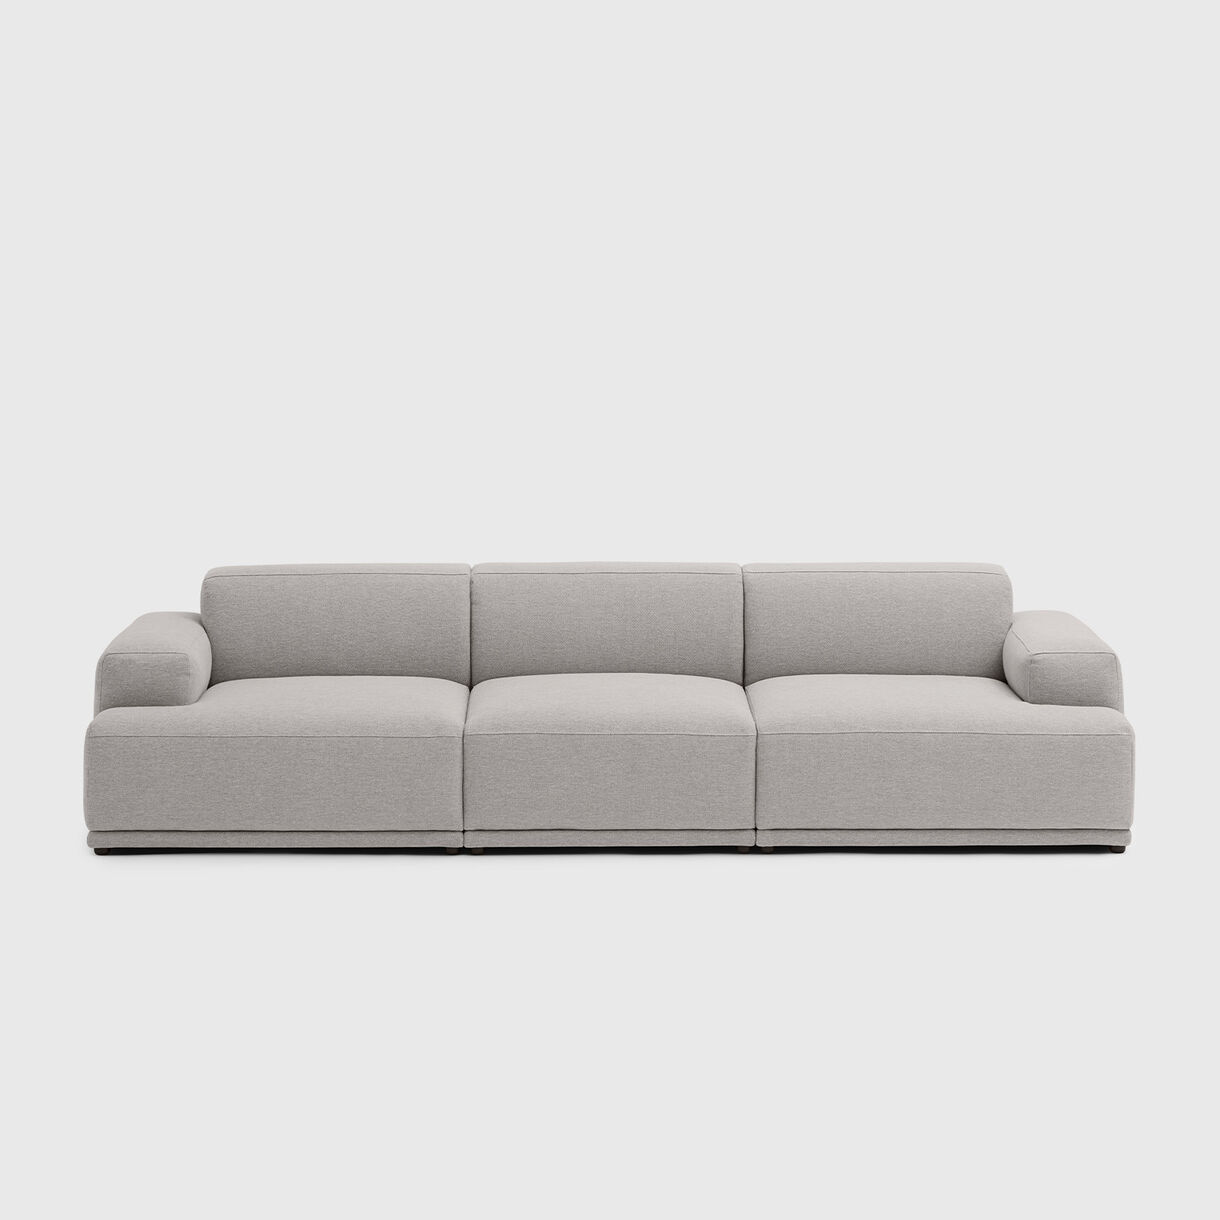 Connect Soft Modular Sofa, 3 Seater, Config 1, Clay 12